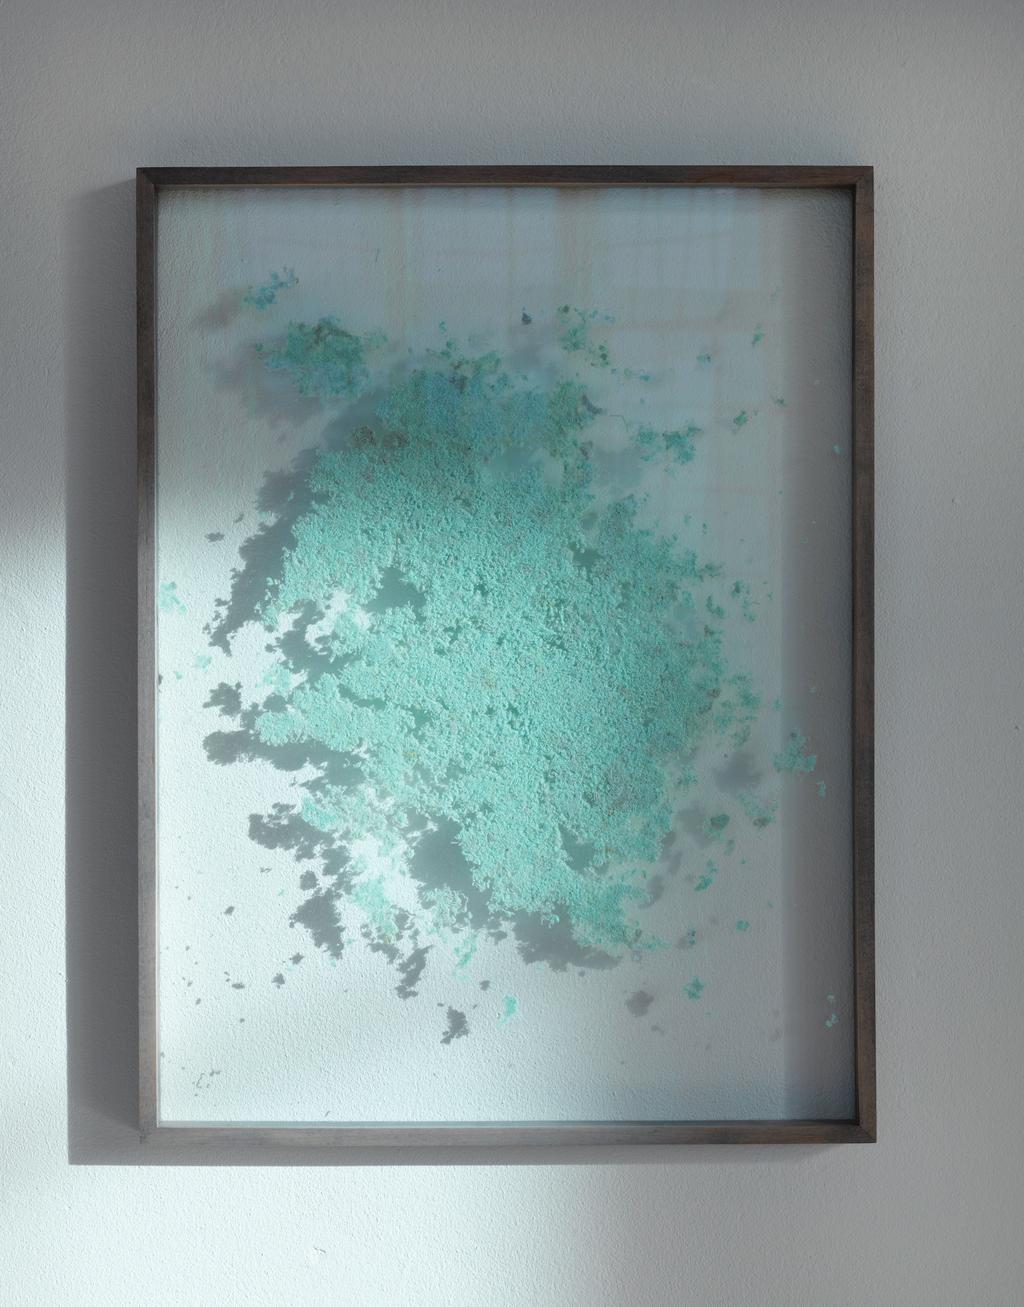 Images Nina Canell, Blue (Diffused), 2014. Shredded sock, frame.